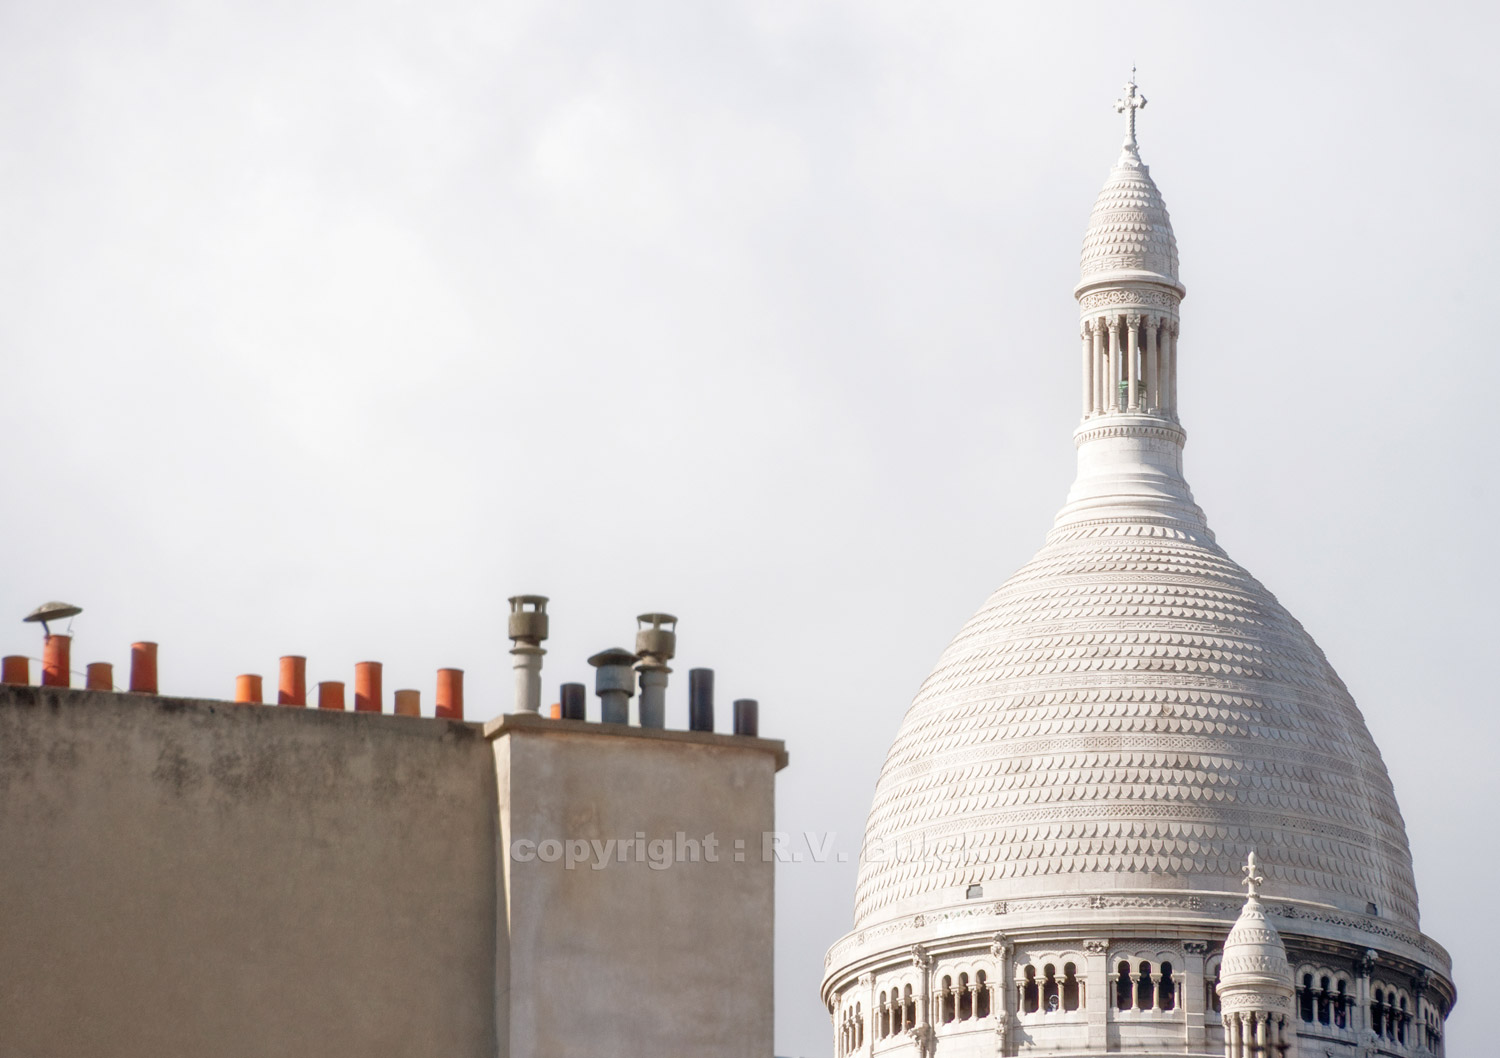 Paris, Sacré Coeur.  ©  R.V. Bulck